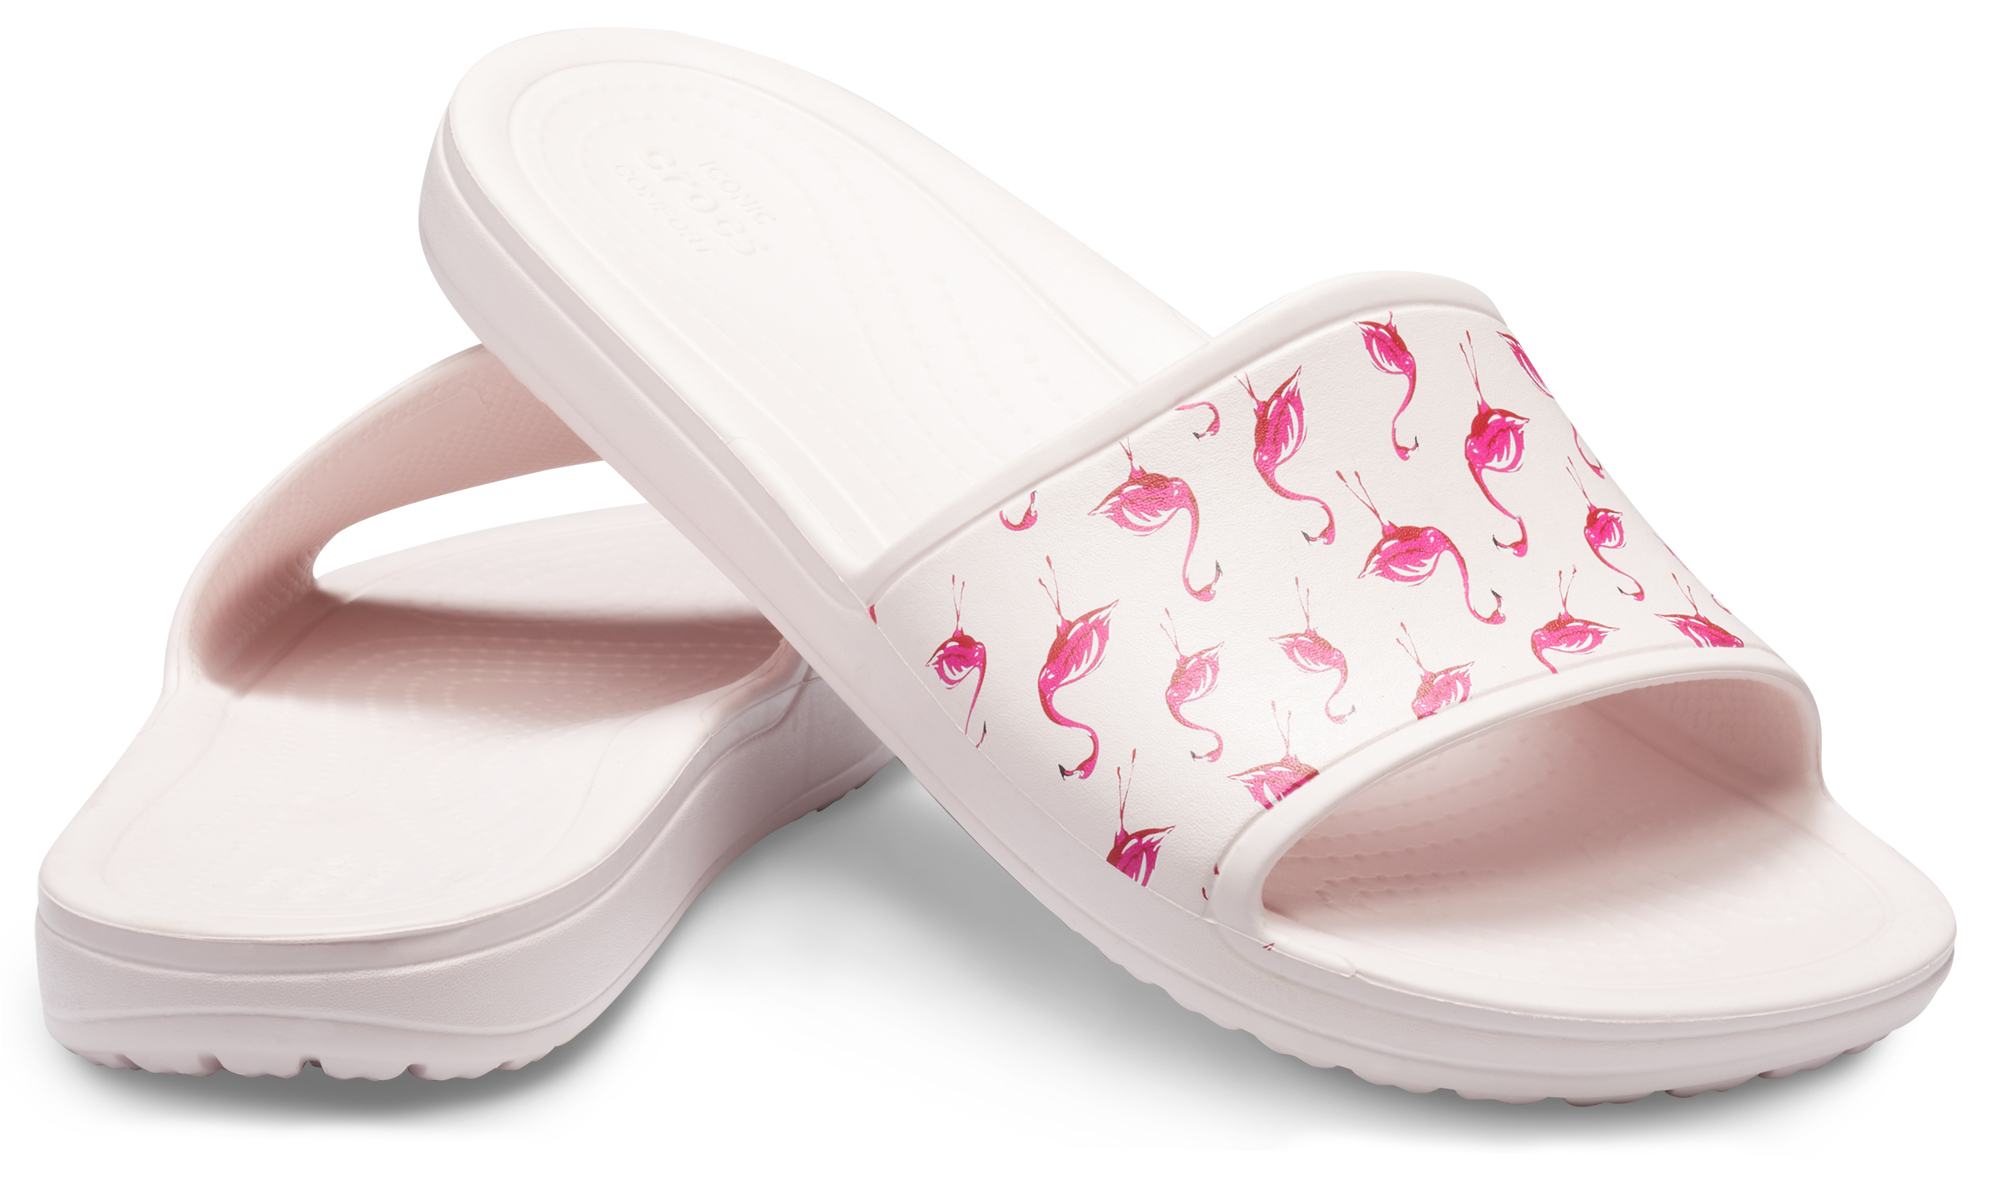 Crocs Women's Sloane SeasonalGrph Sld Slide Sandals - image 2 of 6